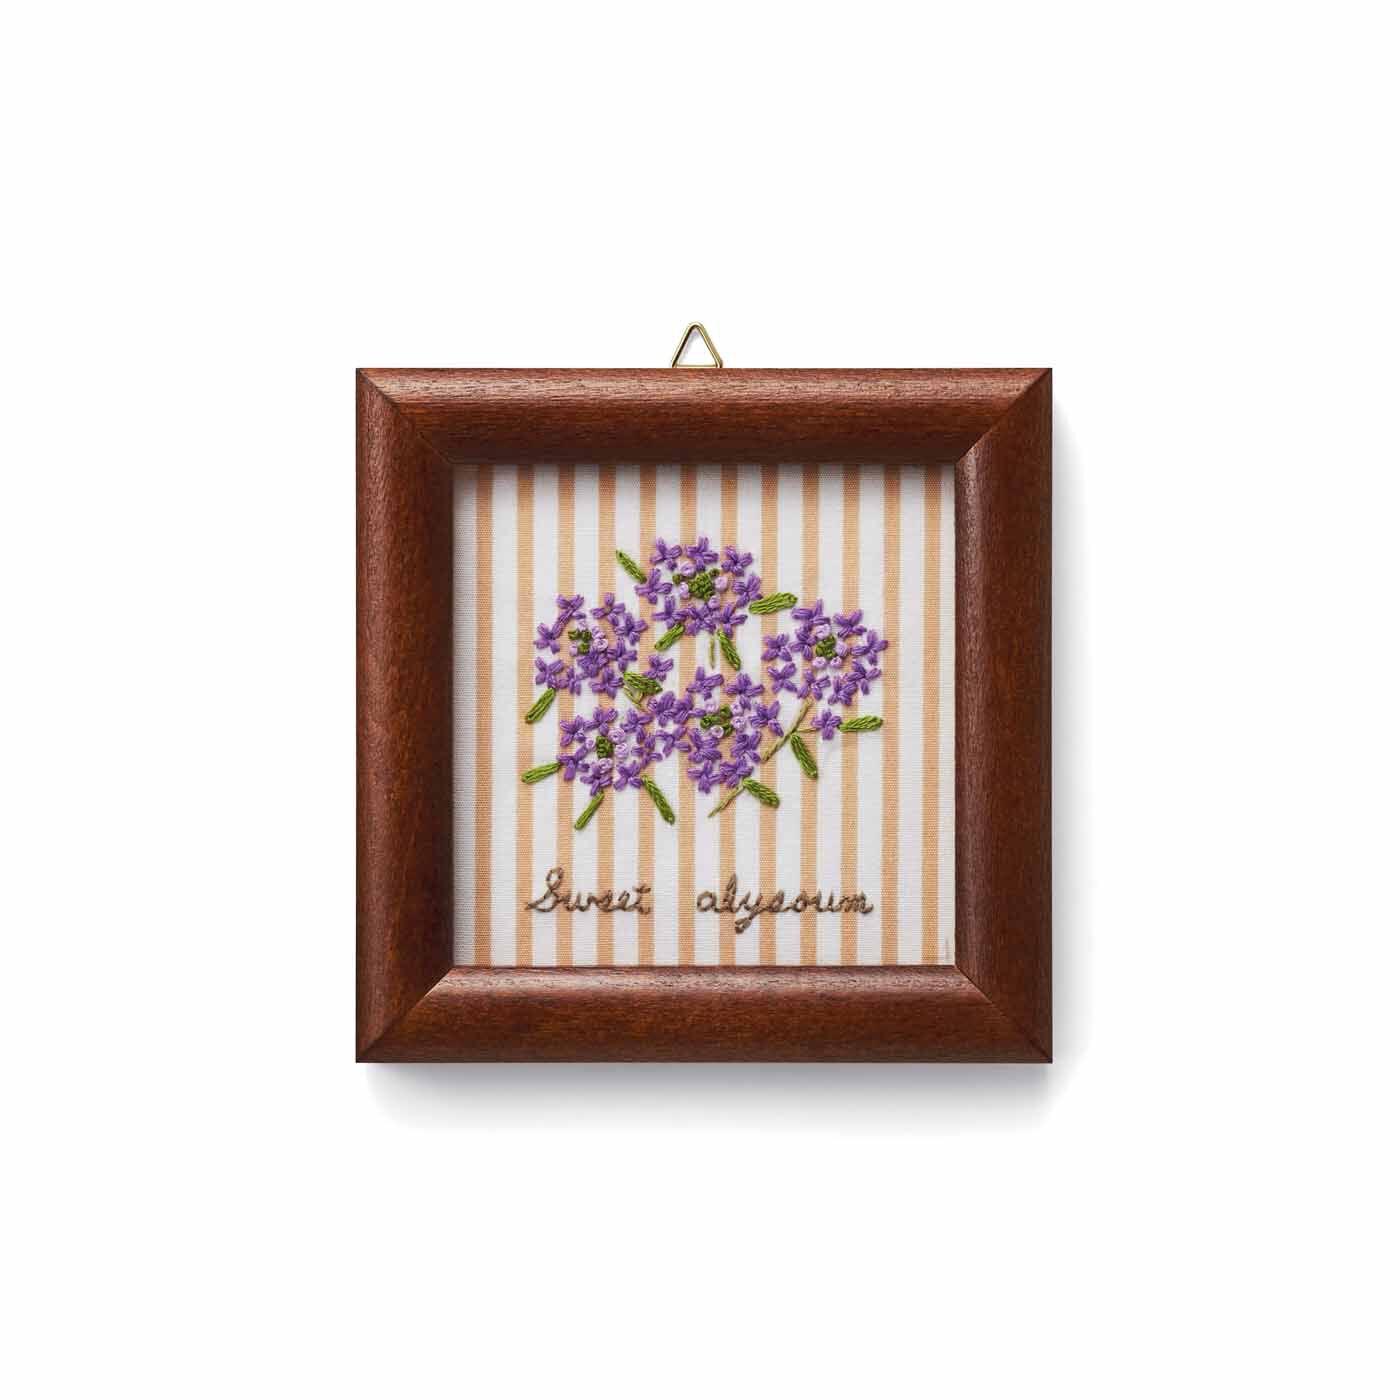 Couturier|摘みたてを集めた　花と木の実のサンプラー刺しゅうフレームの会|スウィートアリッサム